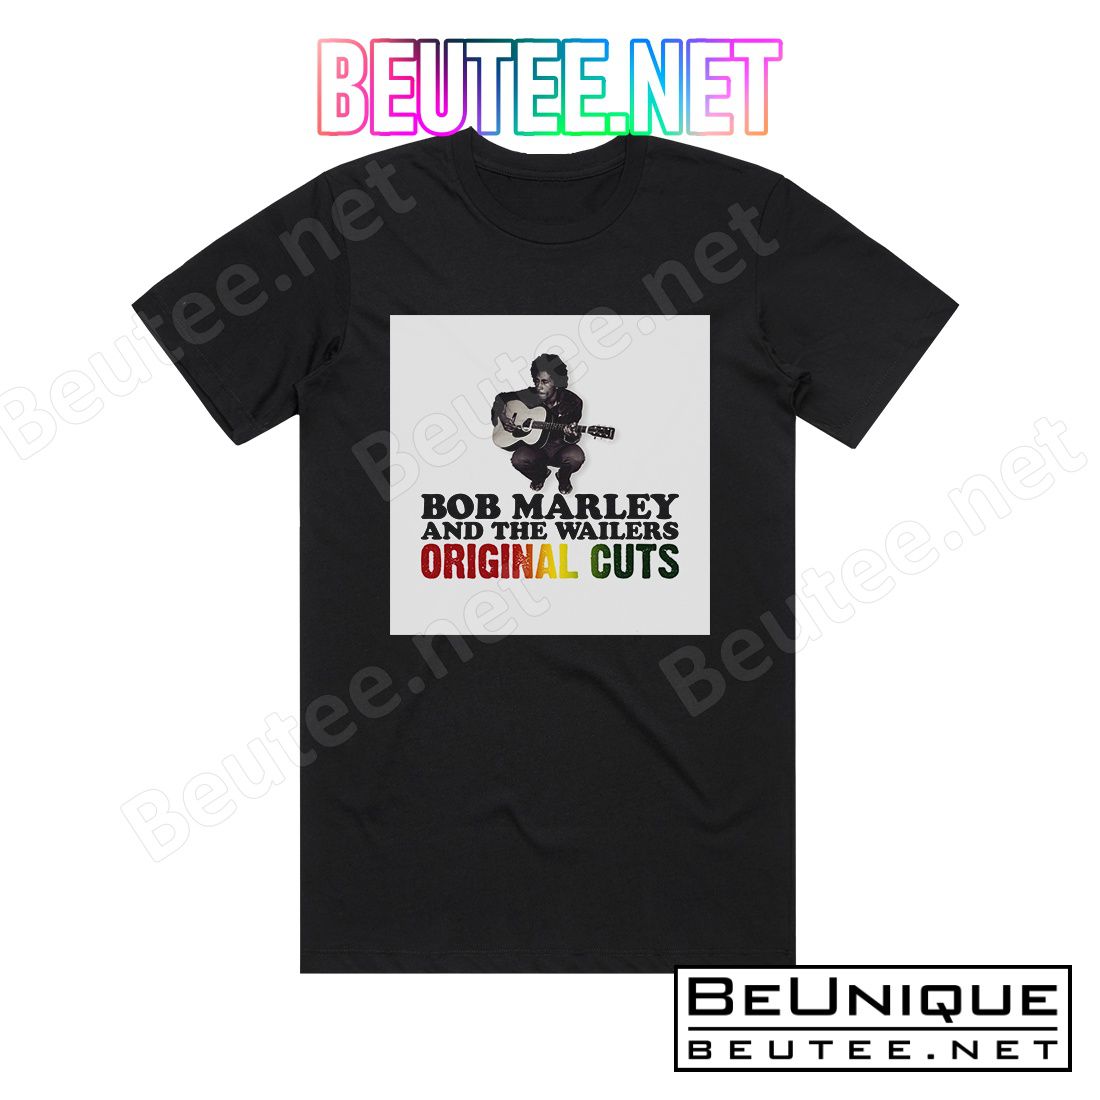 Bob Marley and The Wailers Original Cuts Album Cover T-Shirt